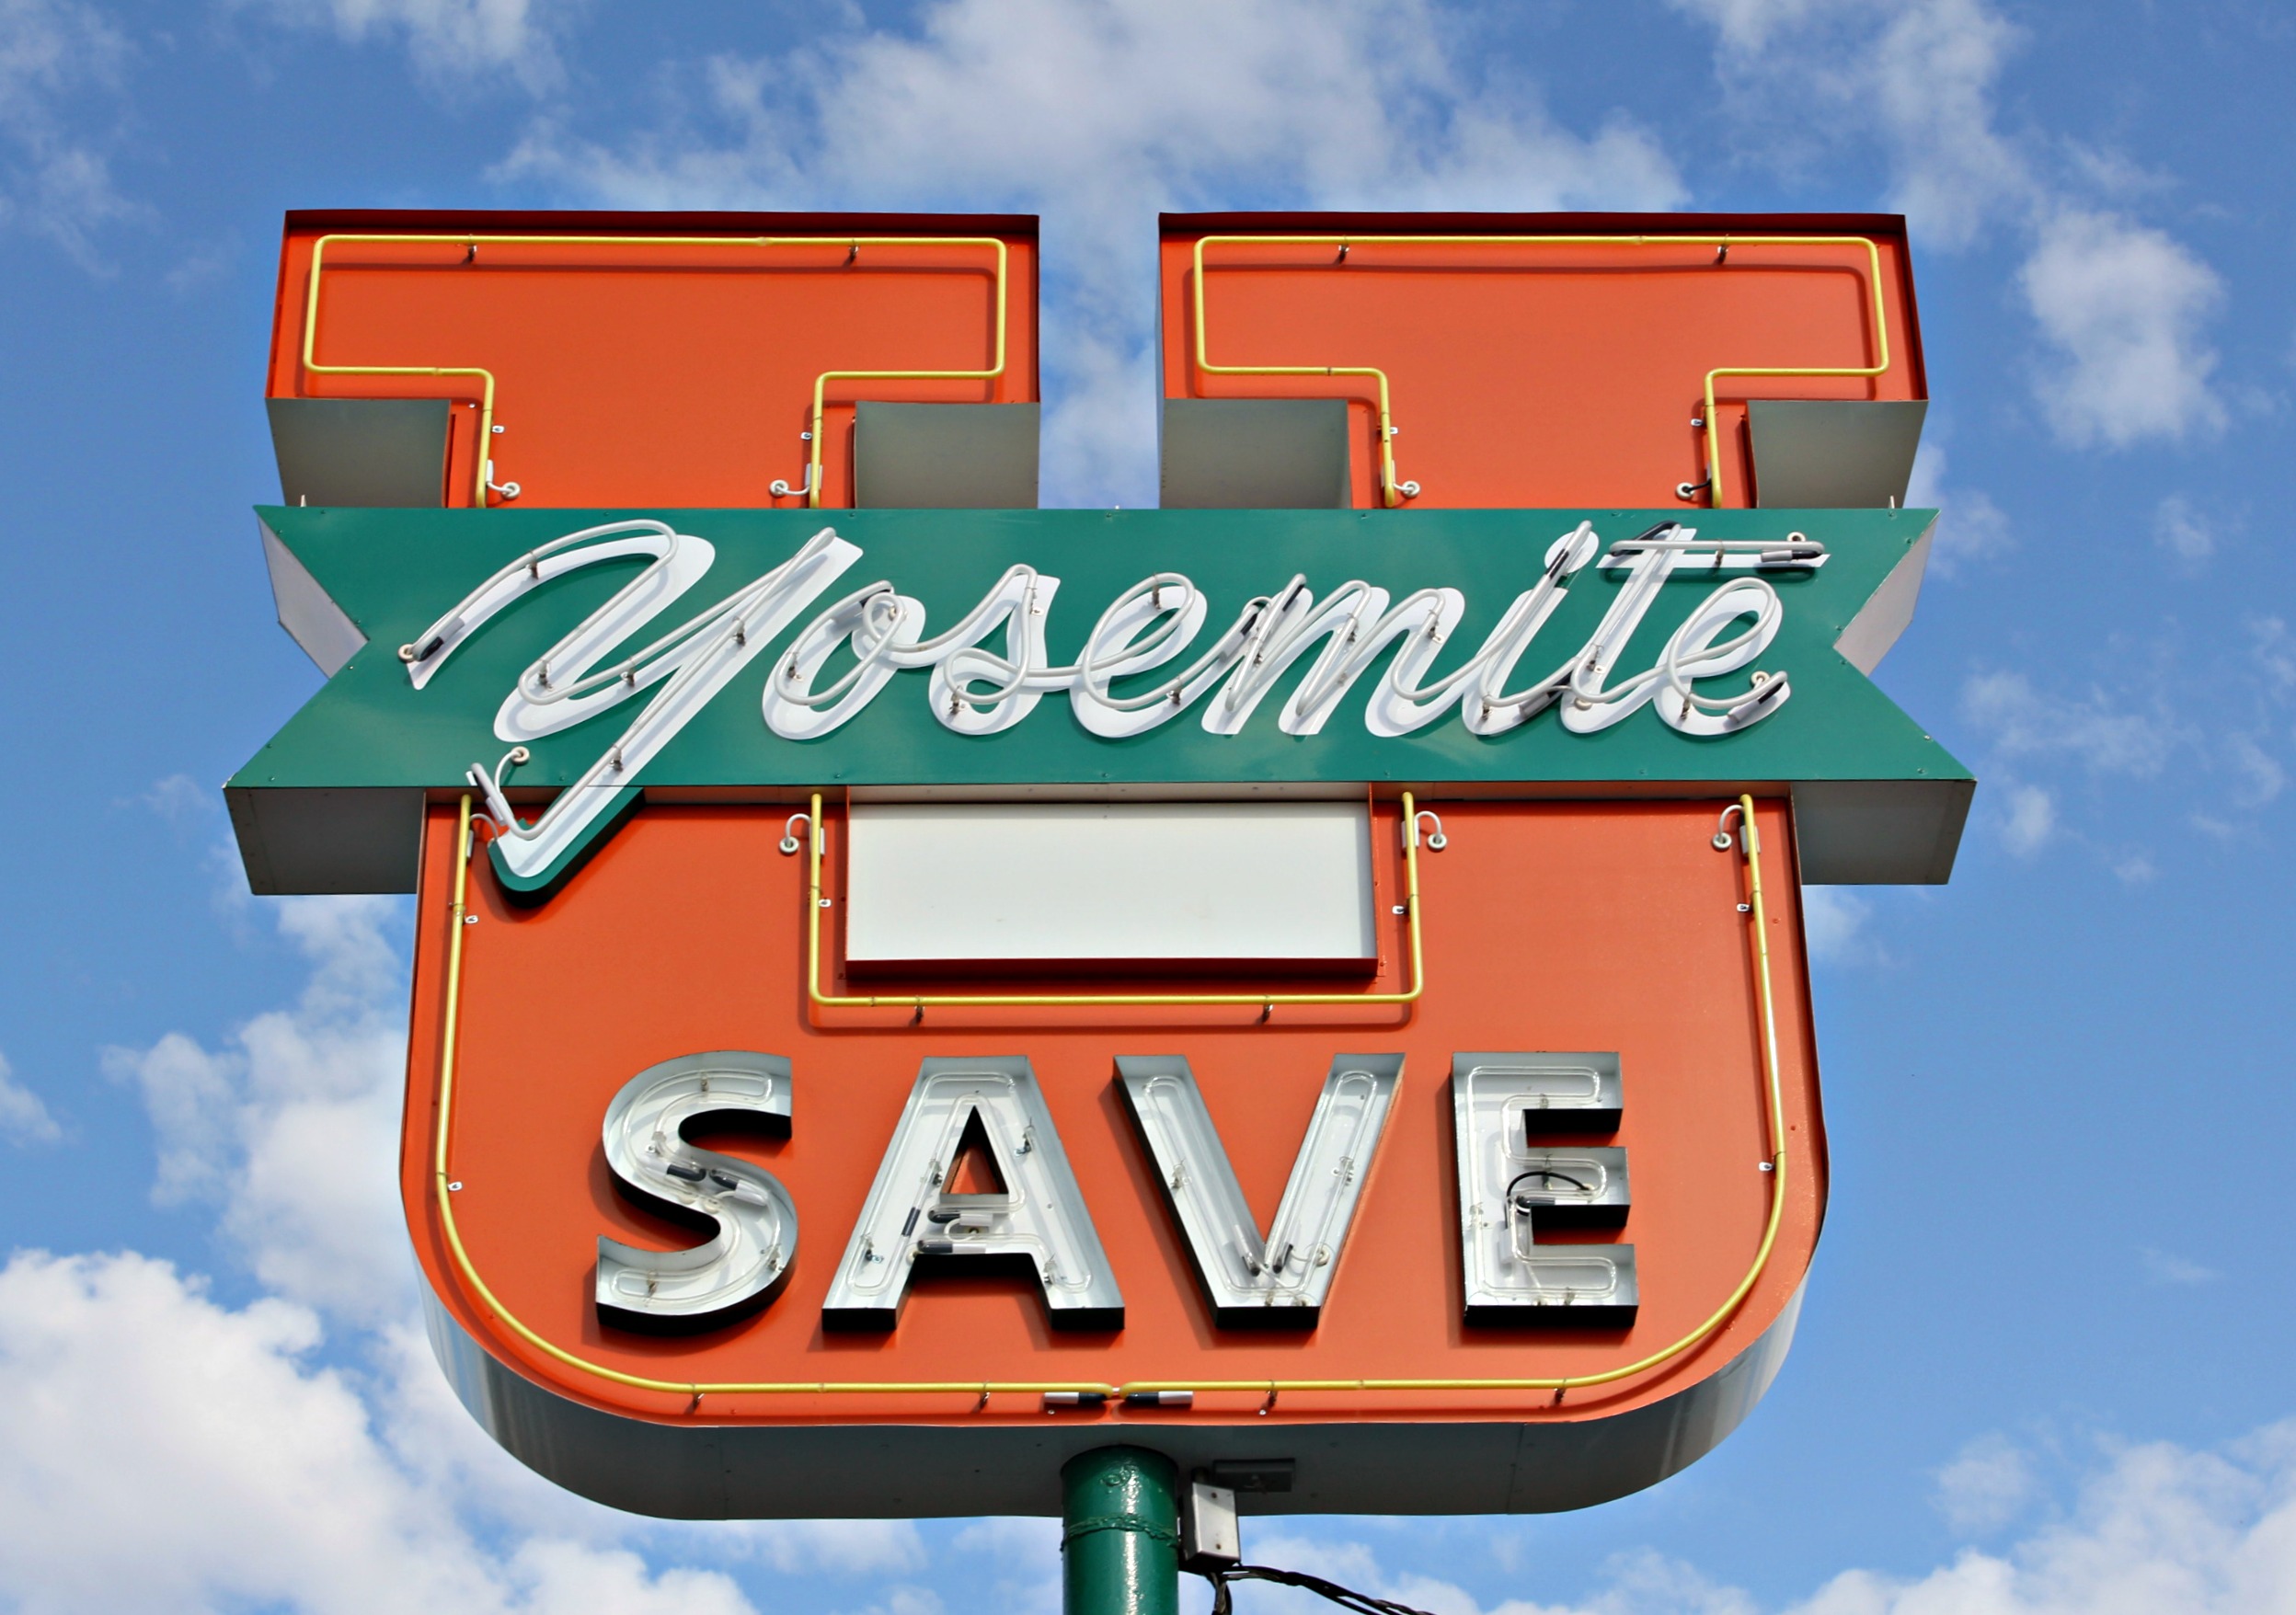 Yosemite U-Save Minimart - 1846 Yosemite Parkway, Merced, California U.S.A. - September 24, 2011